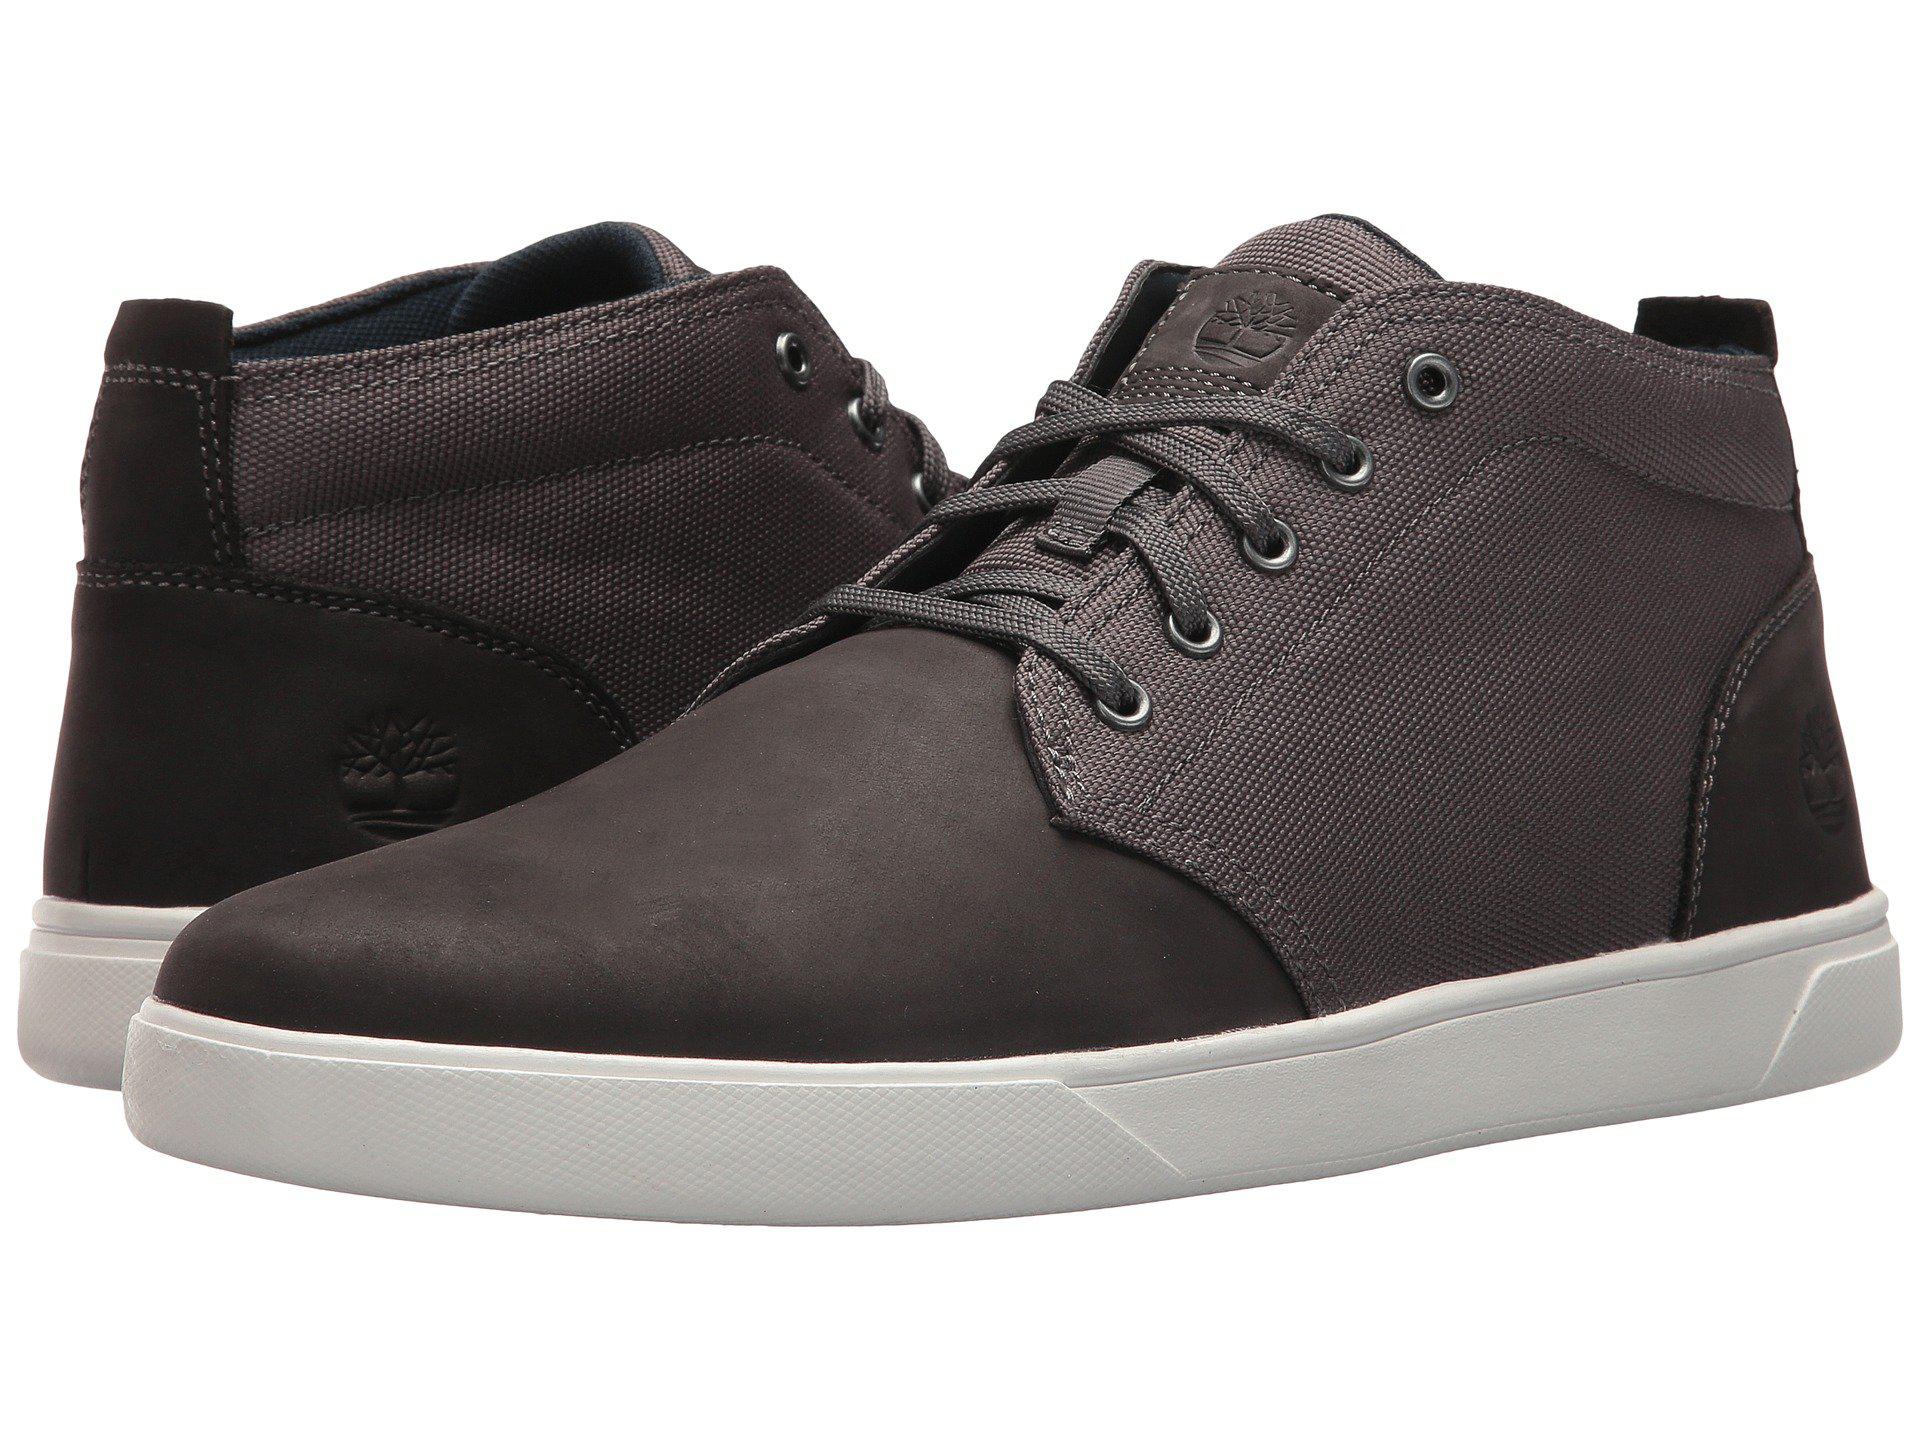 Timberland Groveton Ltt Chukka Leather & Fabric Sneaker in Dark Grey (Gray)  for Men - Lyst